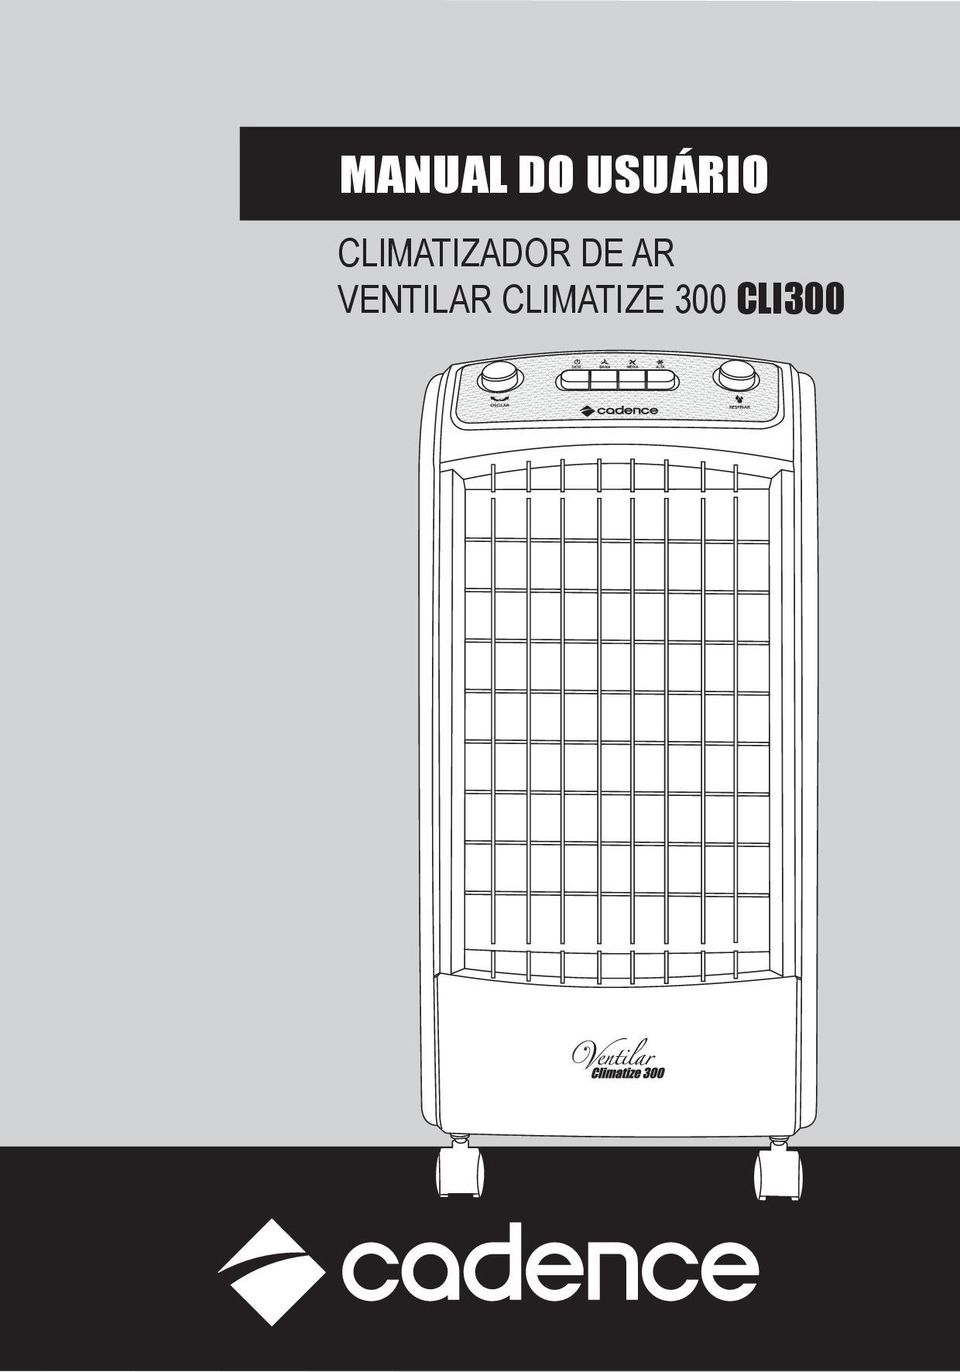 CLIMATIZADOR DE